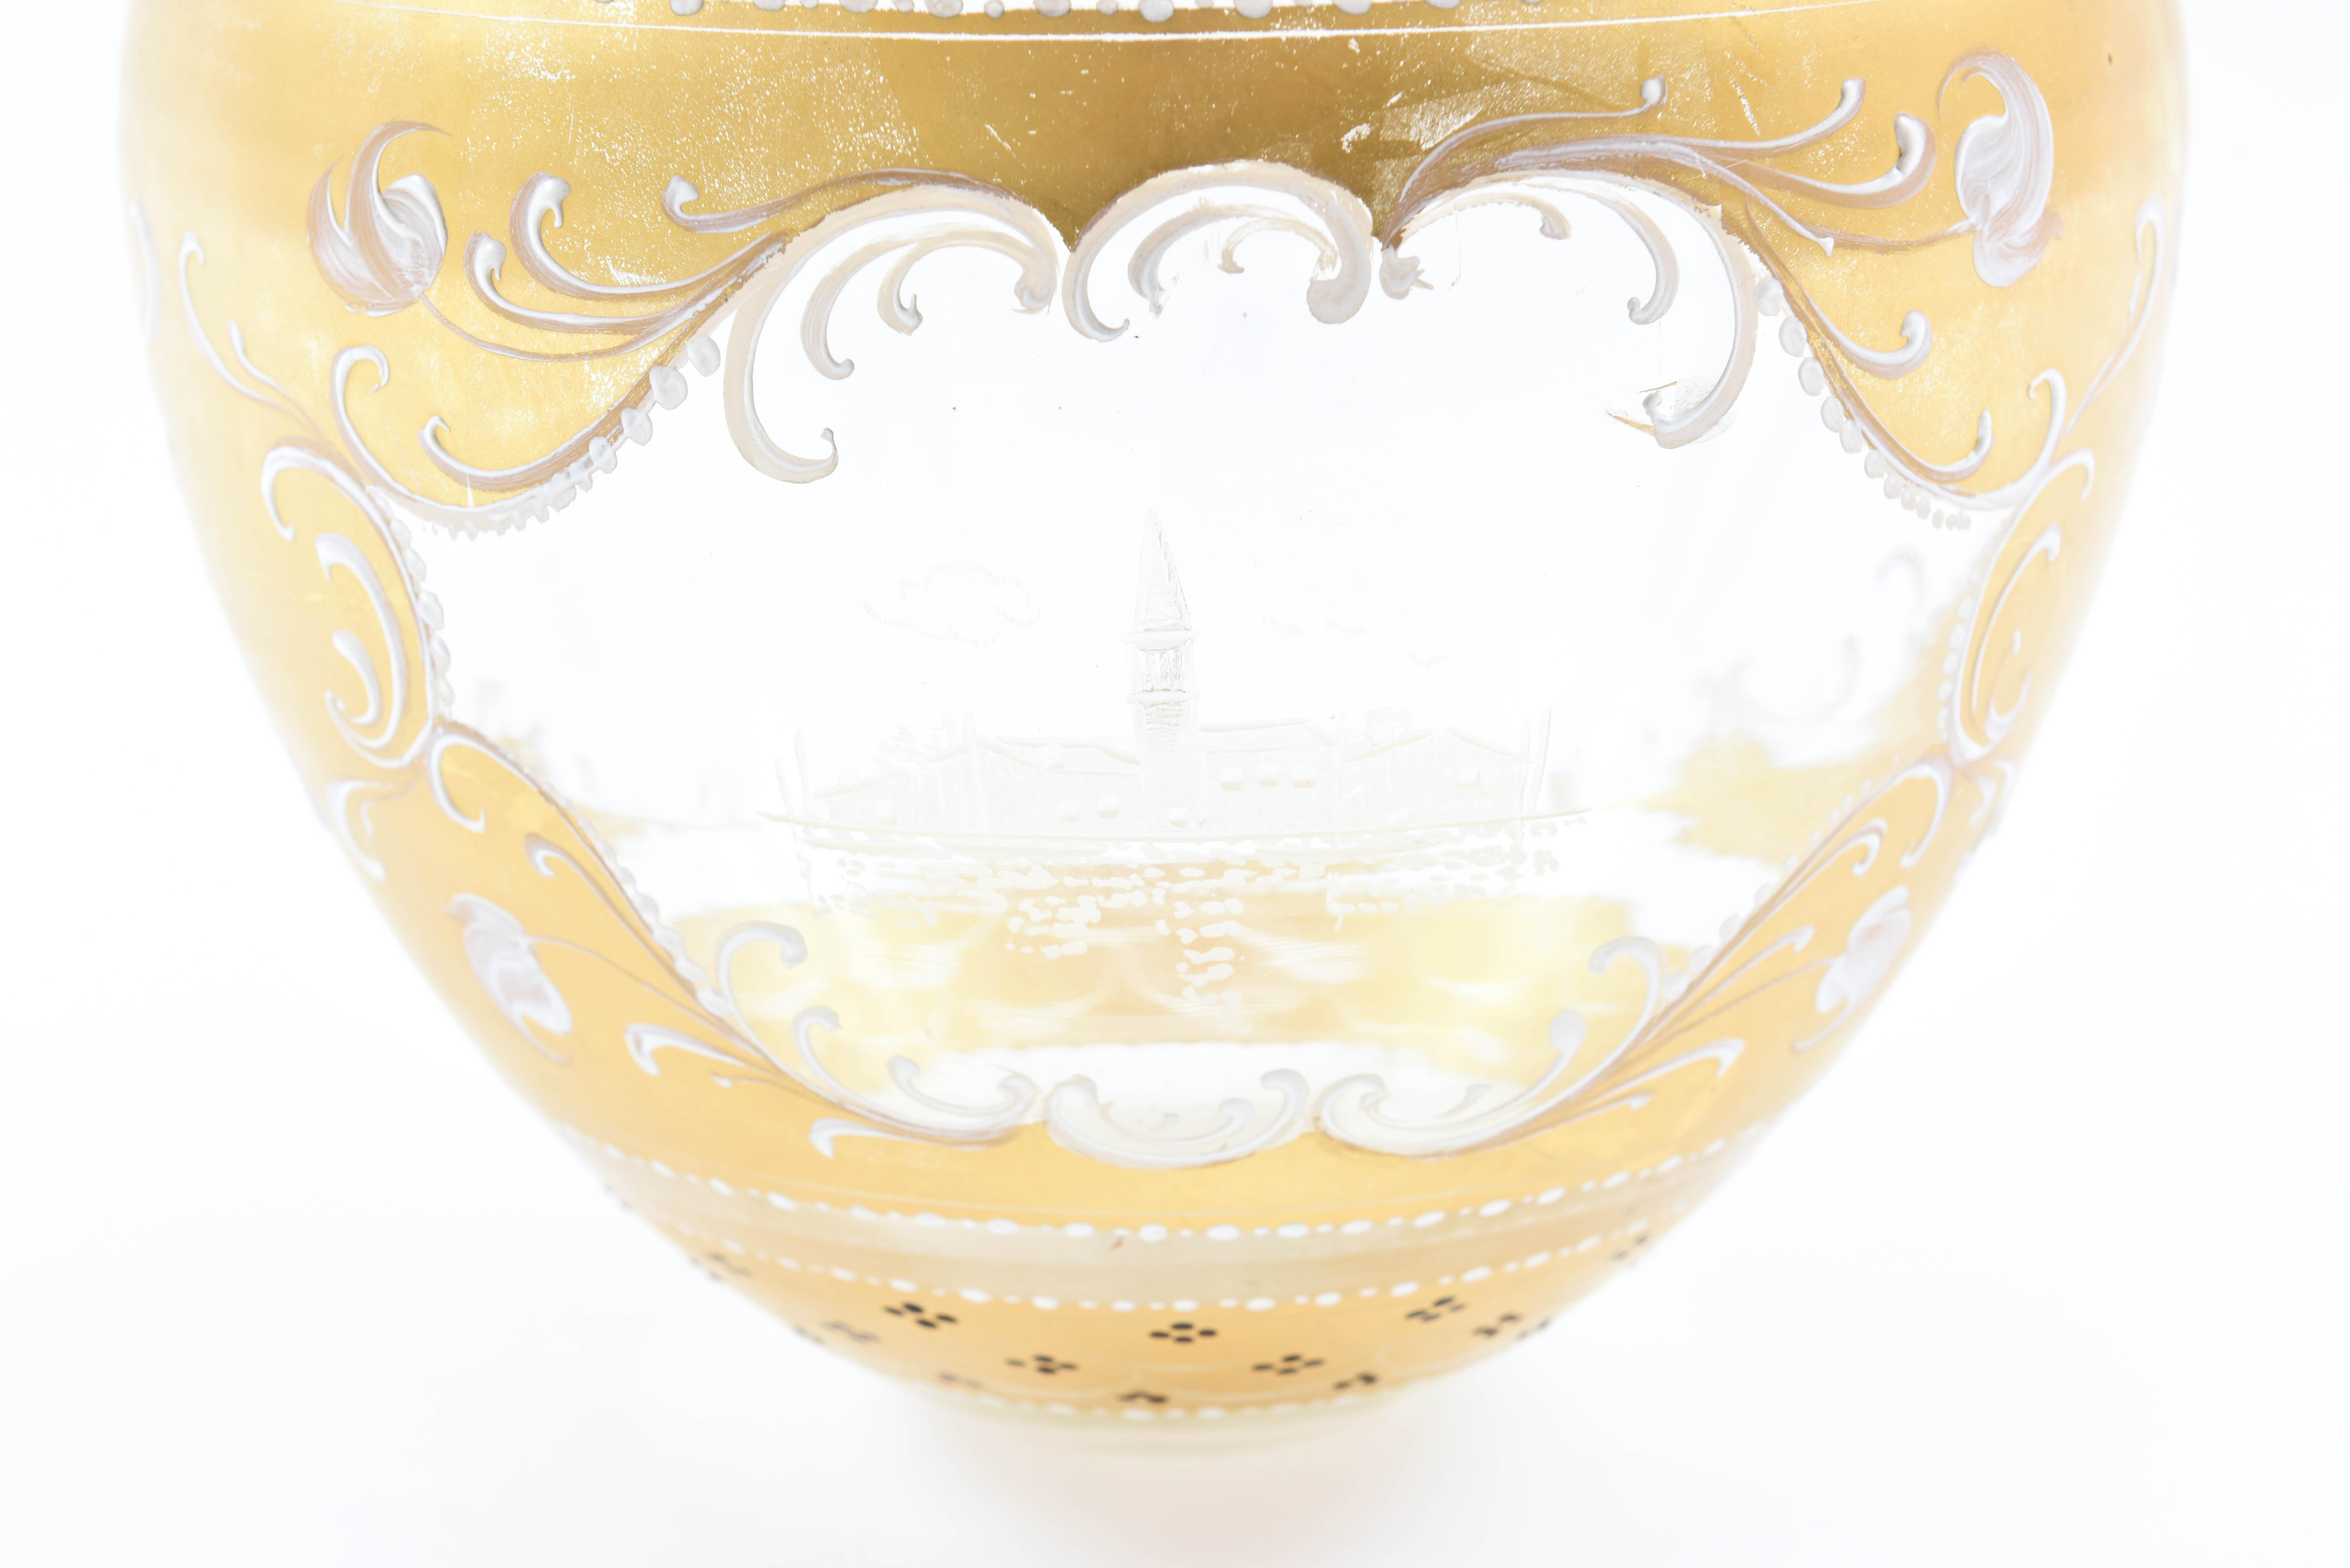 Hand-Painted Tall Impressive Venetian Glass Vase with White Enamel Detail, Hand Engraving